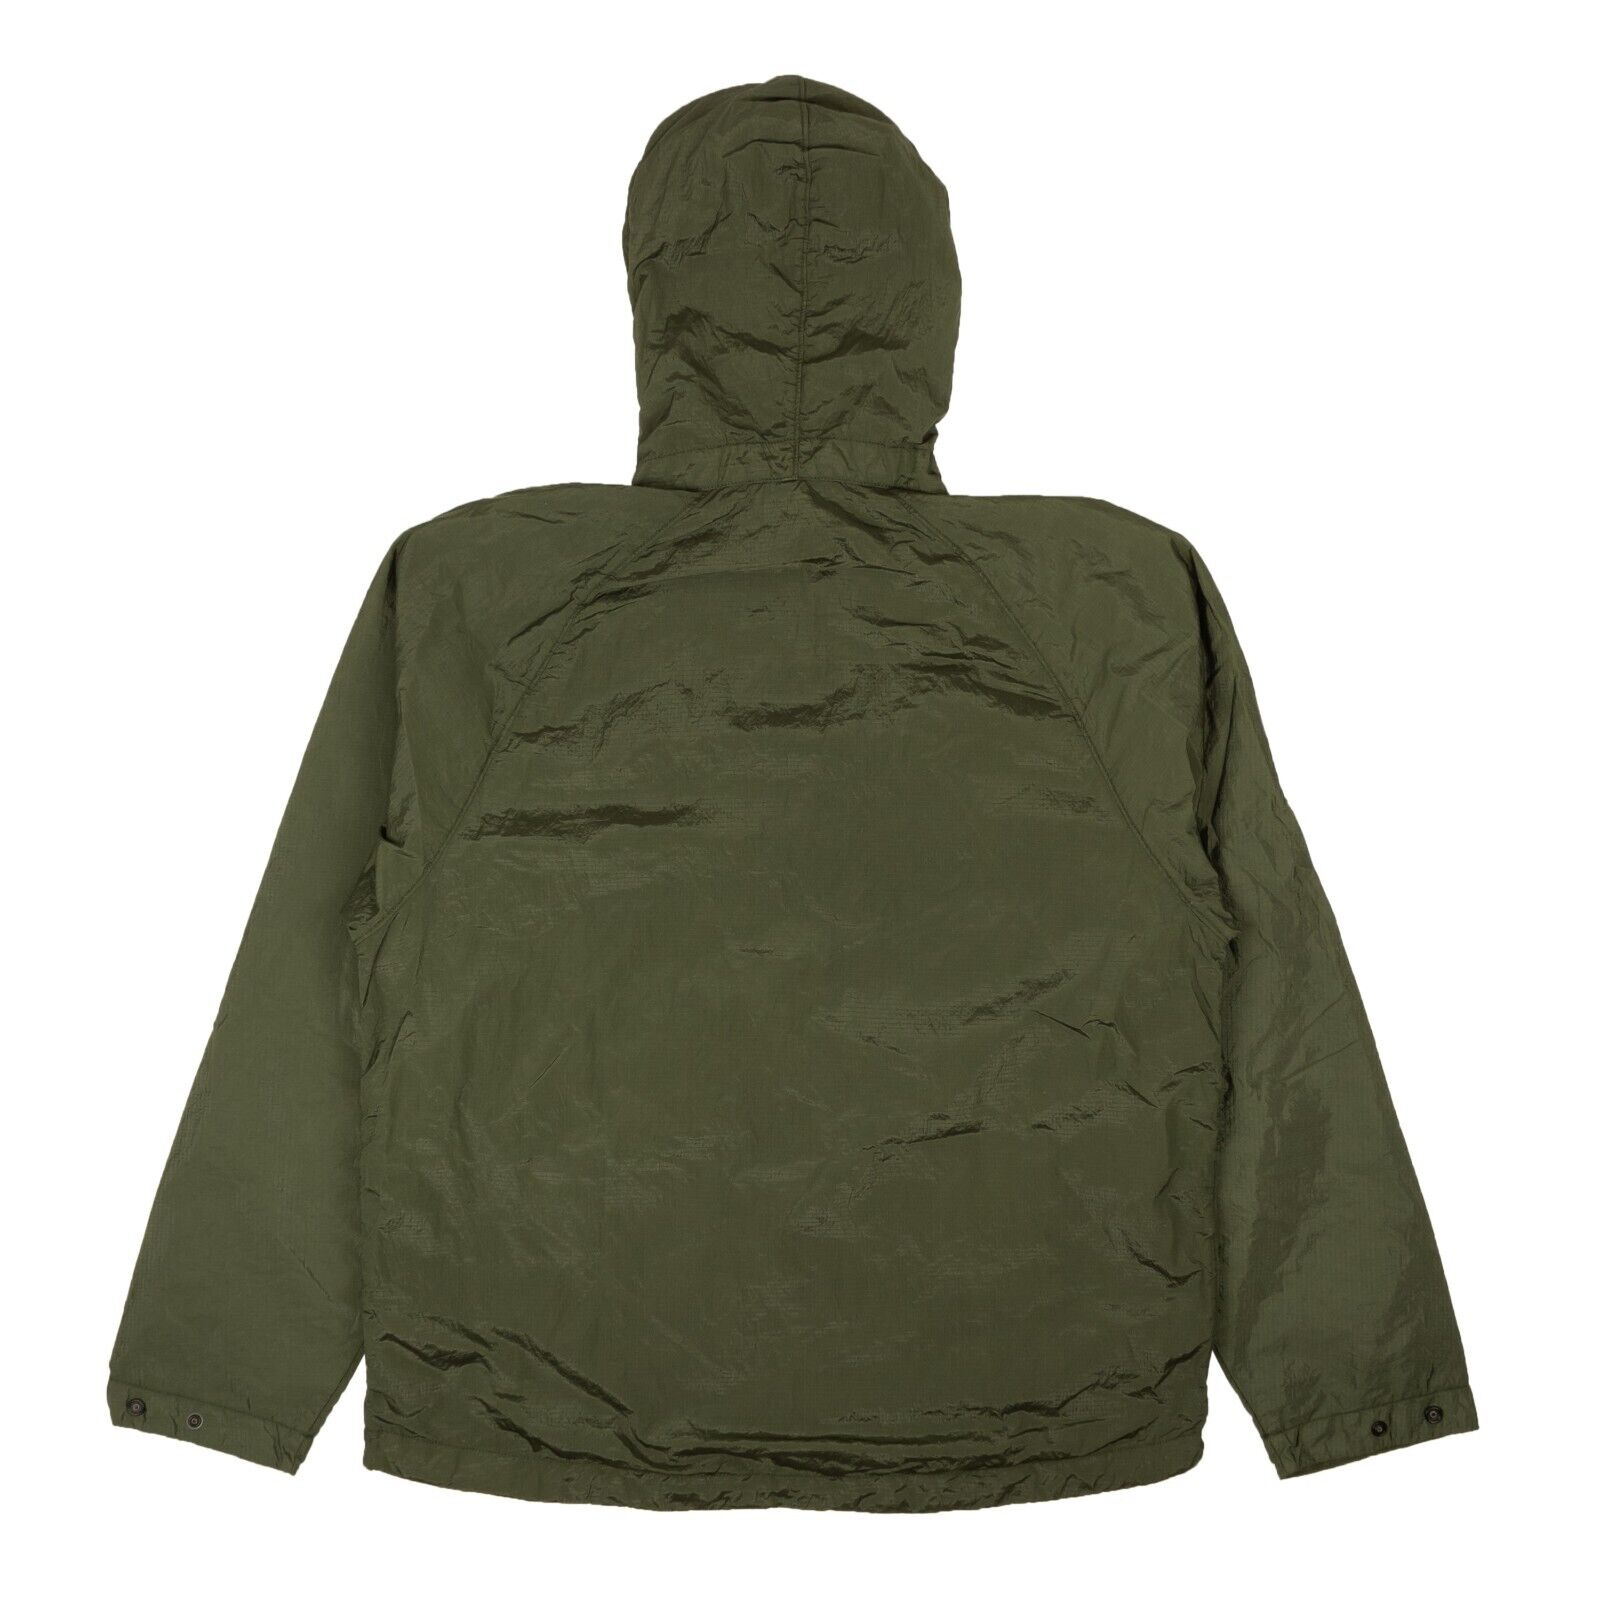 NWT STONE ISLAND Dark Olive Nylon Metal Watro Jacket Size S $720